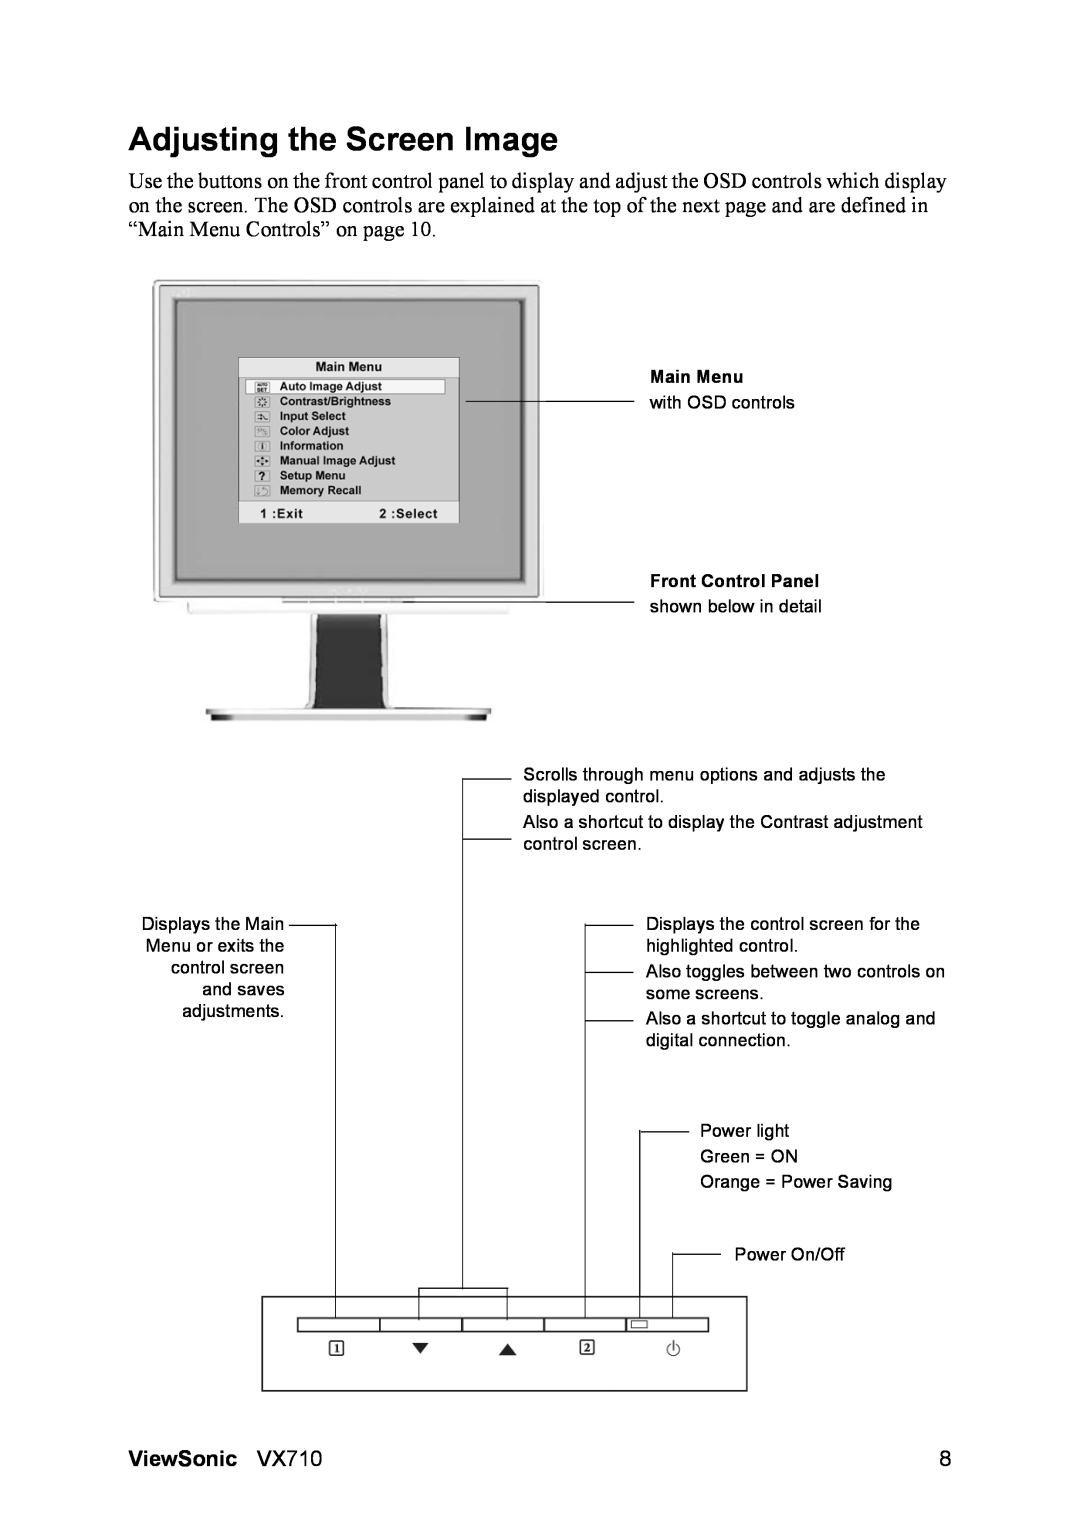 ViewSonic VX710 manual Adjusting the Screen Image, ViewSonic, Main Menu, Front Control Panel 